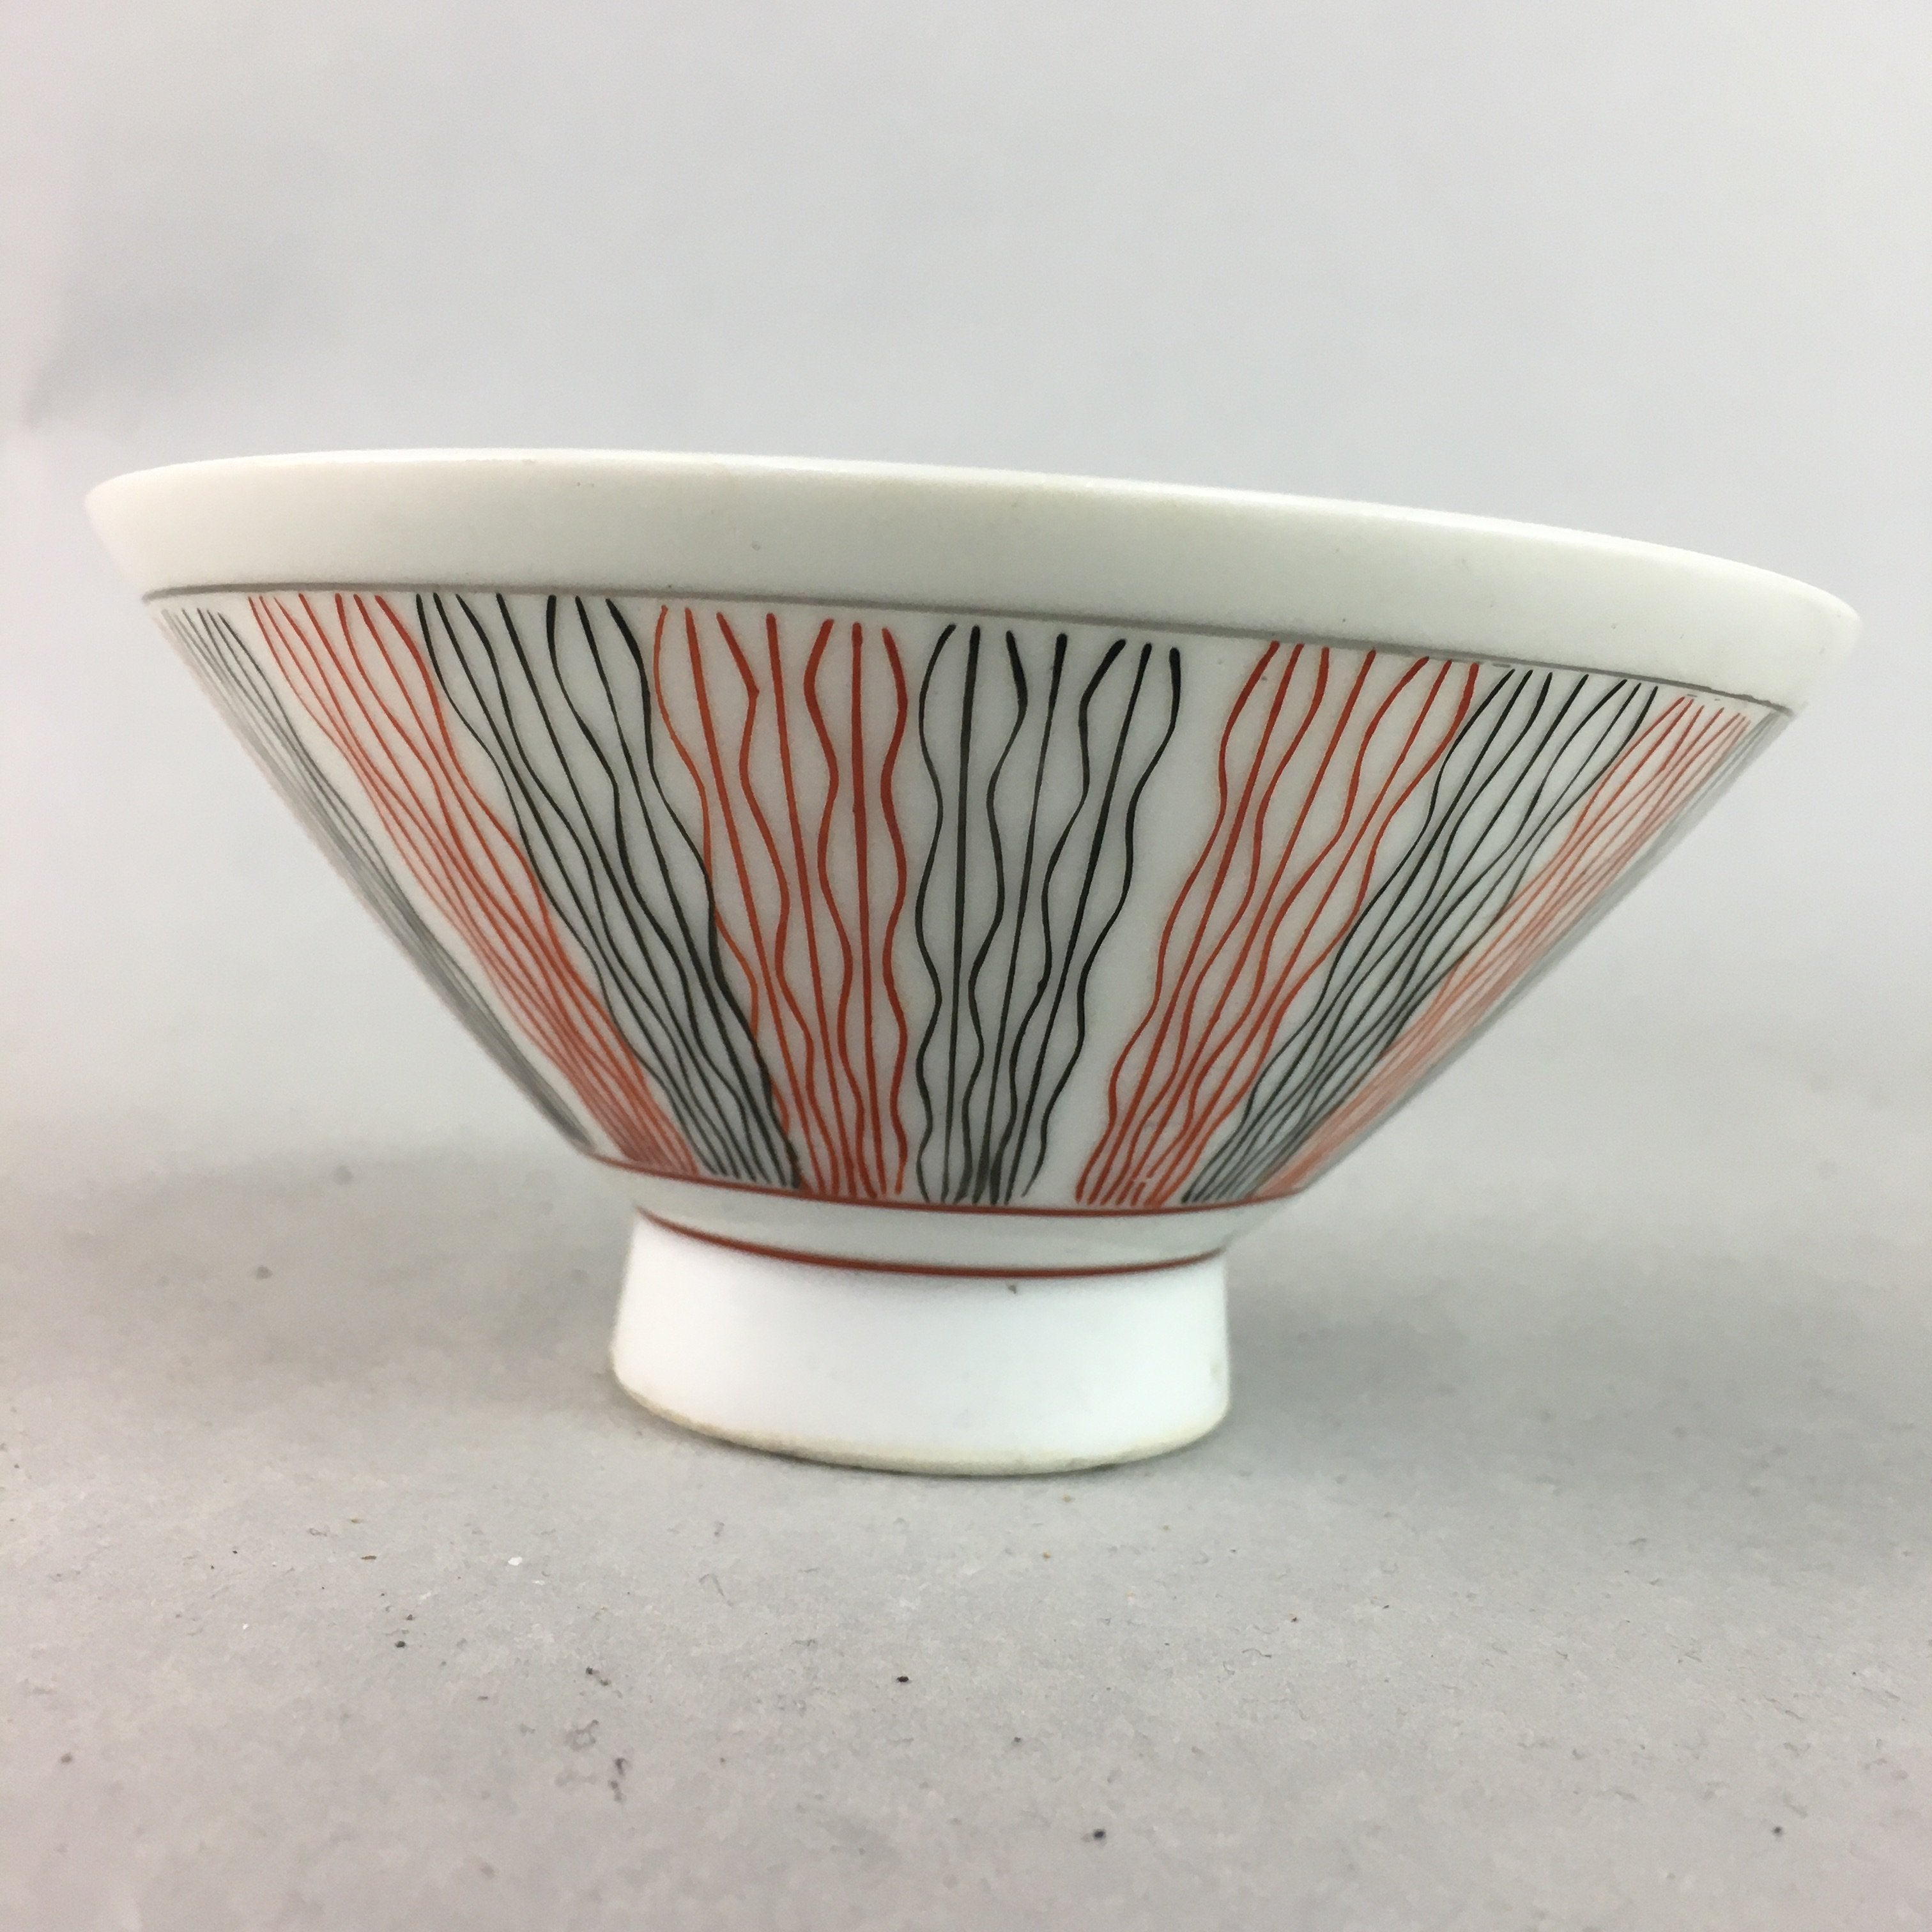 Japanese Porcelain Rice Bowl Vtg Chawan Wavy Line Seaweed Red Black PP206